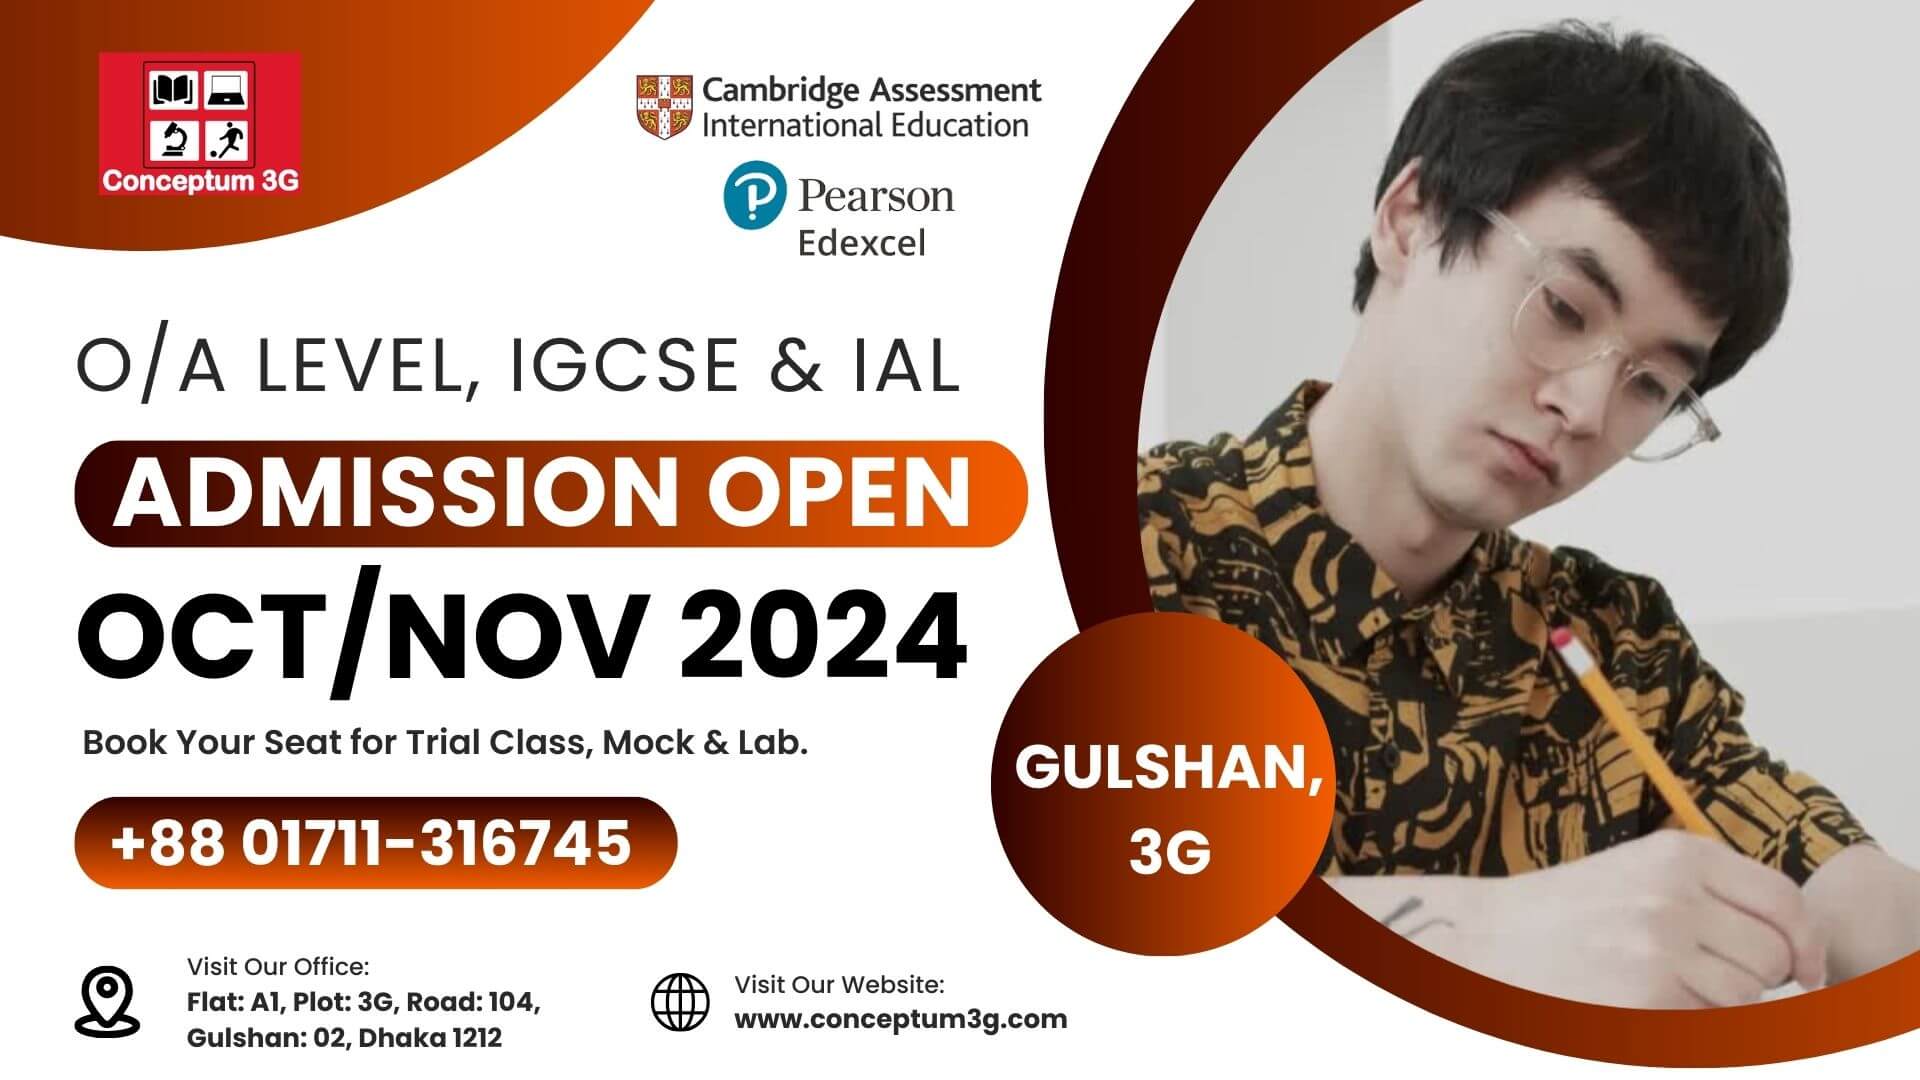 O/A level, IGCSE & IAL Admission Open at Conceptum 3G